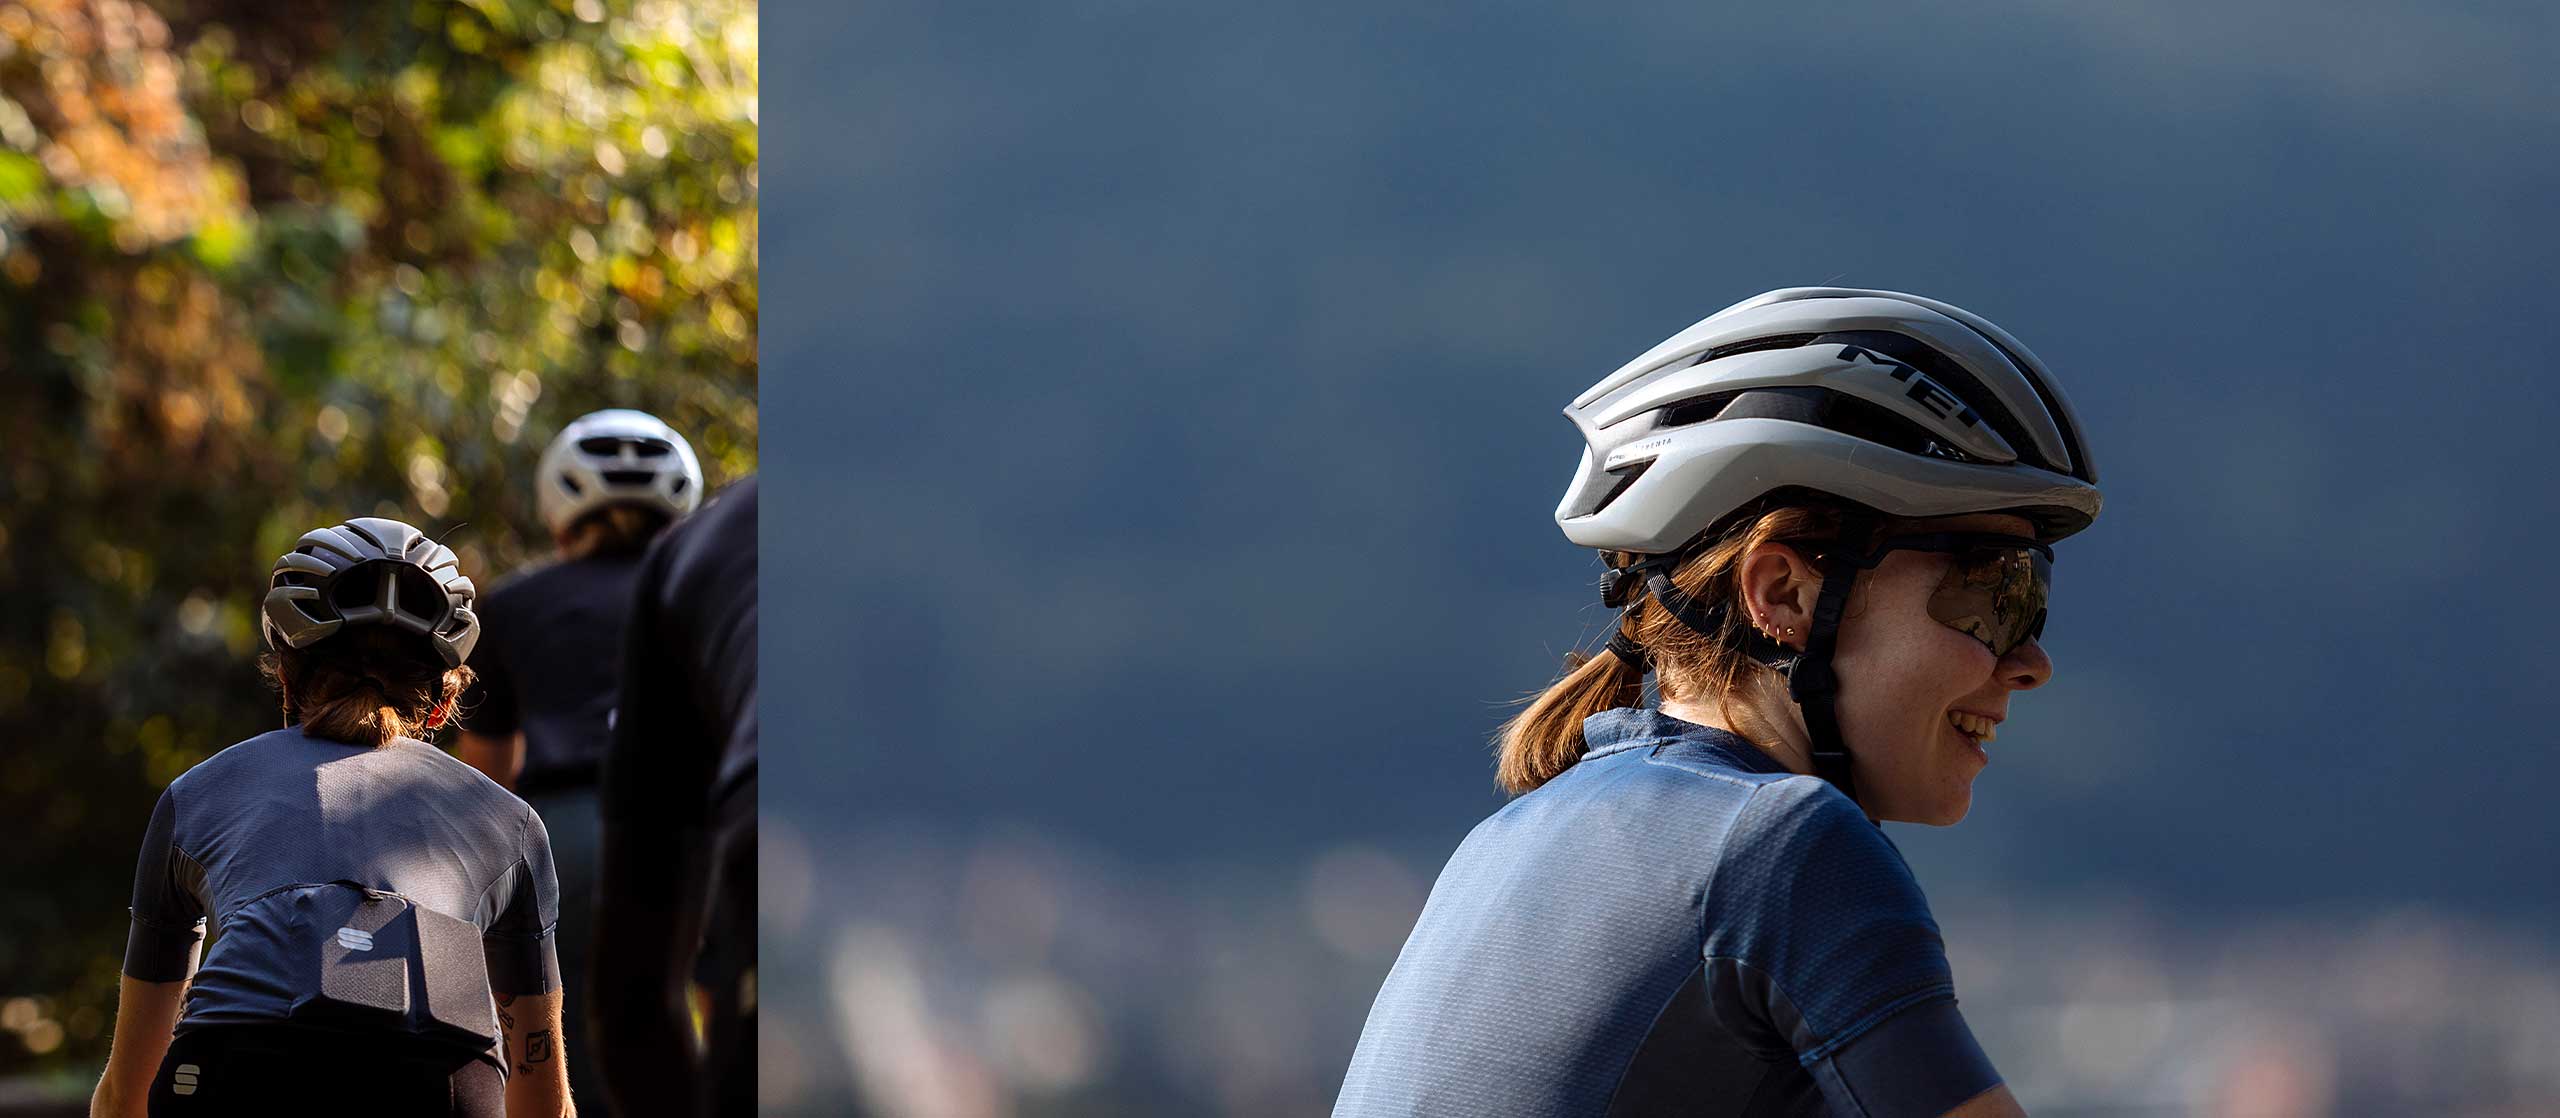 MET Helmets Specialists in road cycling helmets